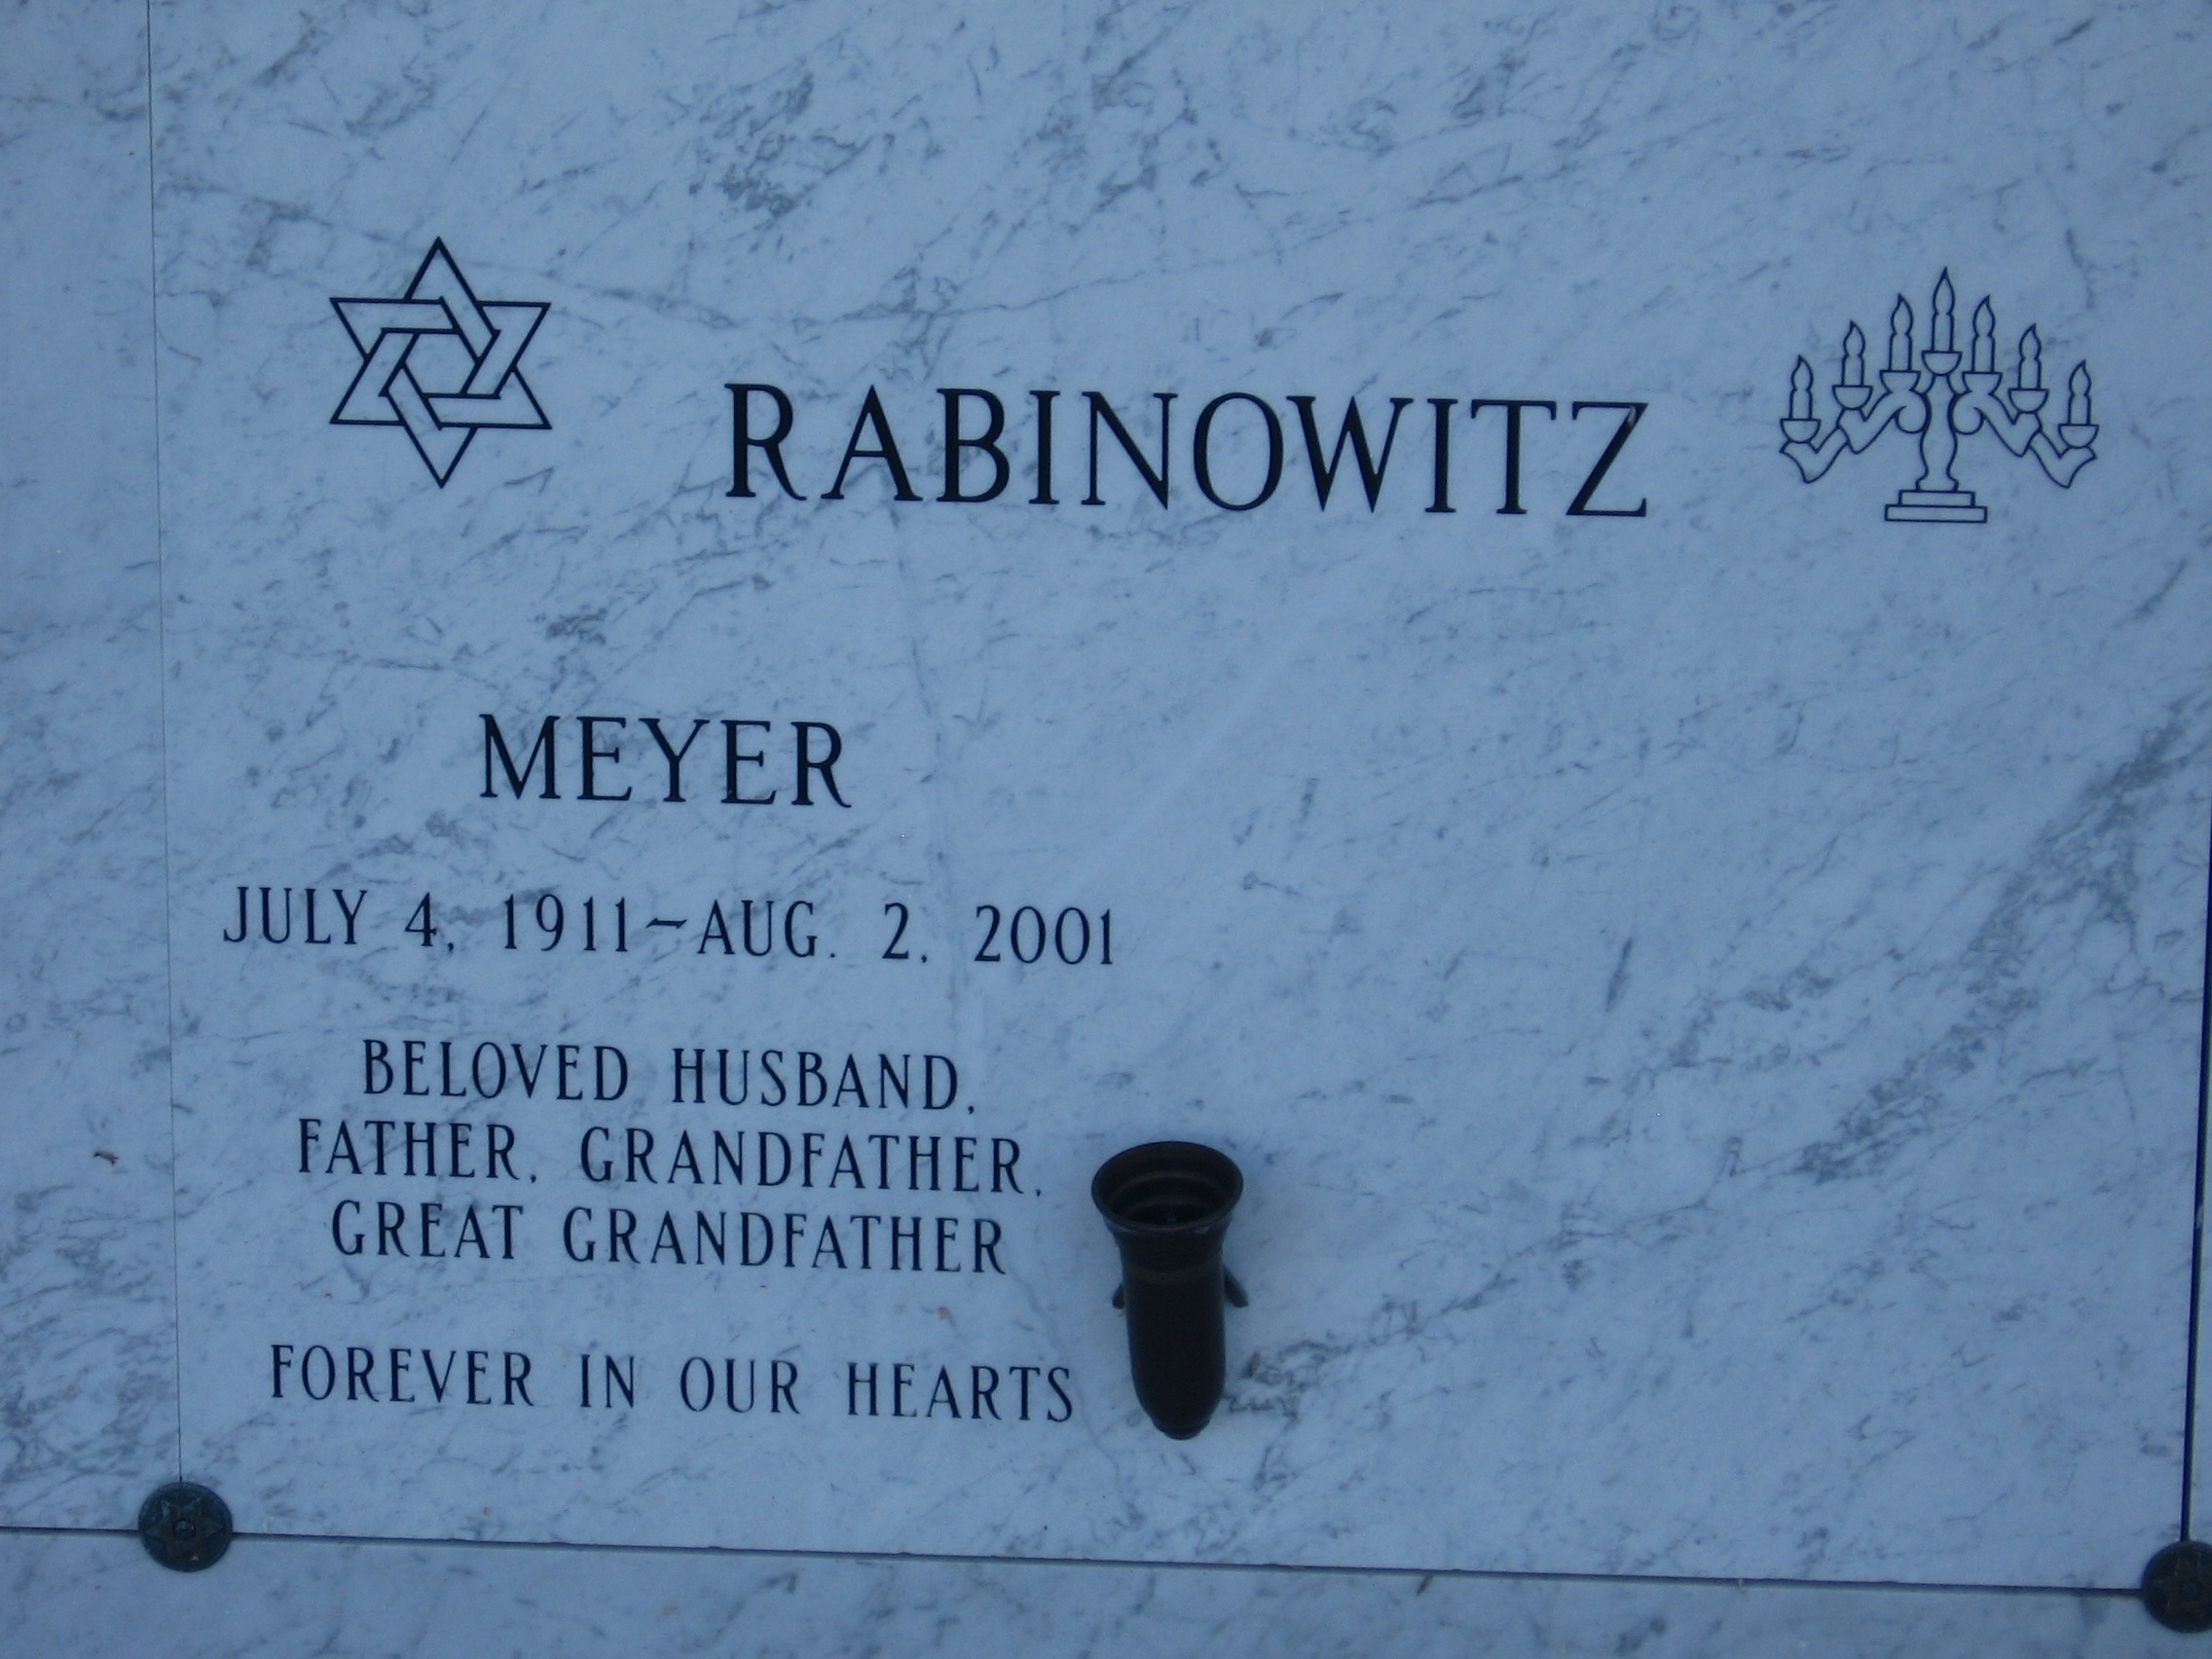 Meyer Rabinowitz